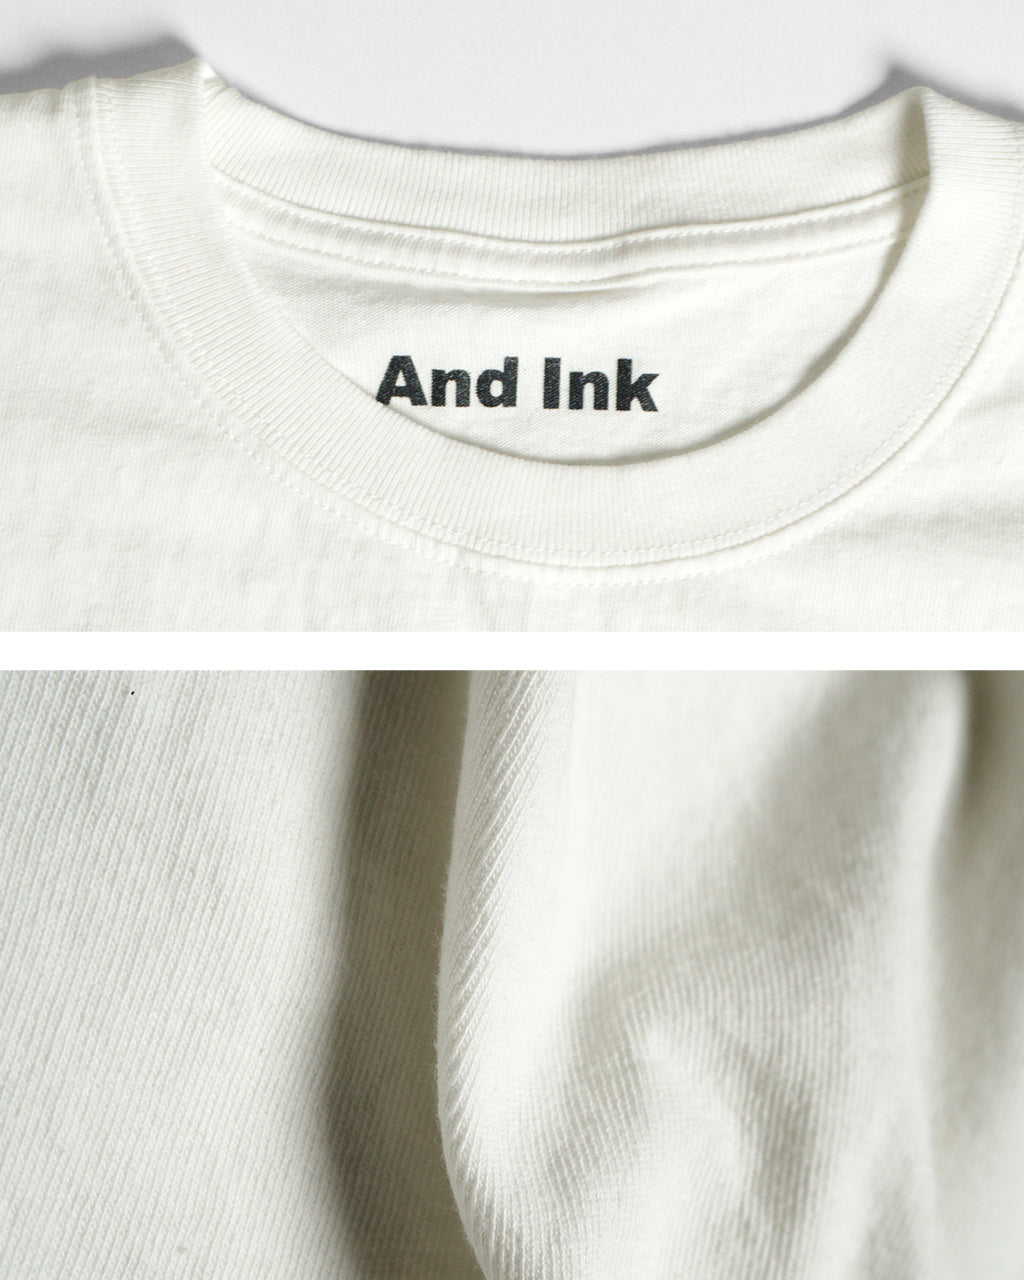 And Ink アンドインク ベーシック ロゴ Tシャツ Basic logo tee 半袖 カットソー モノトーン Basic logo tee